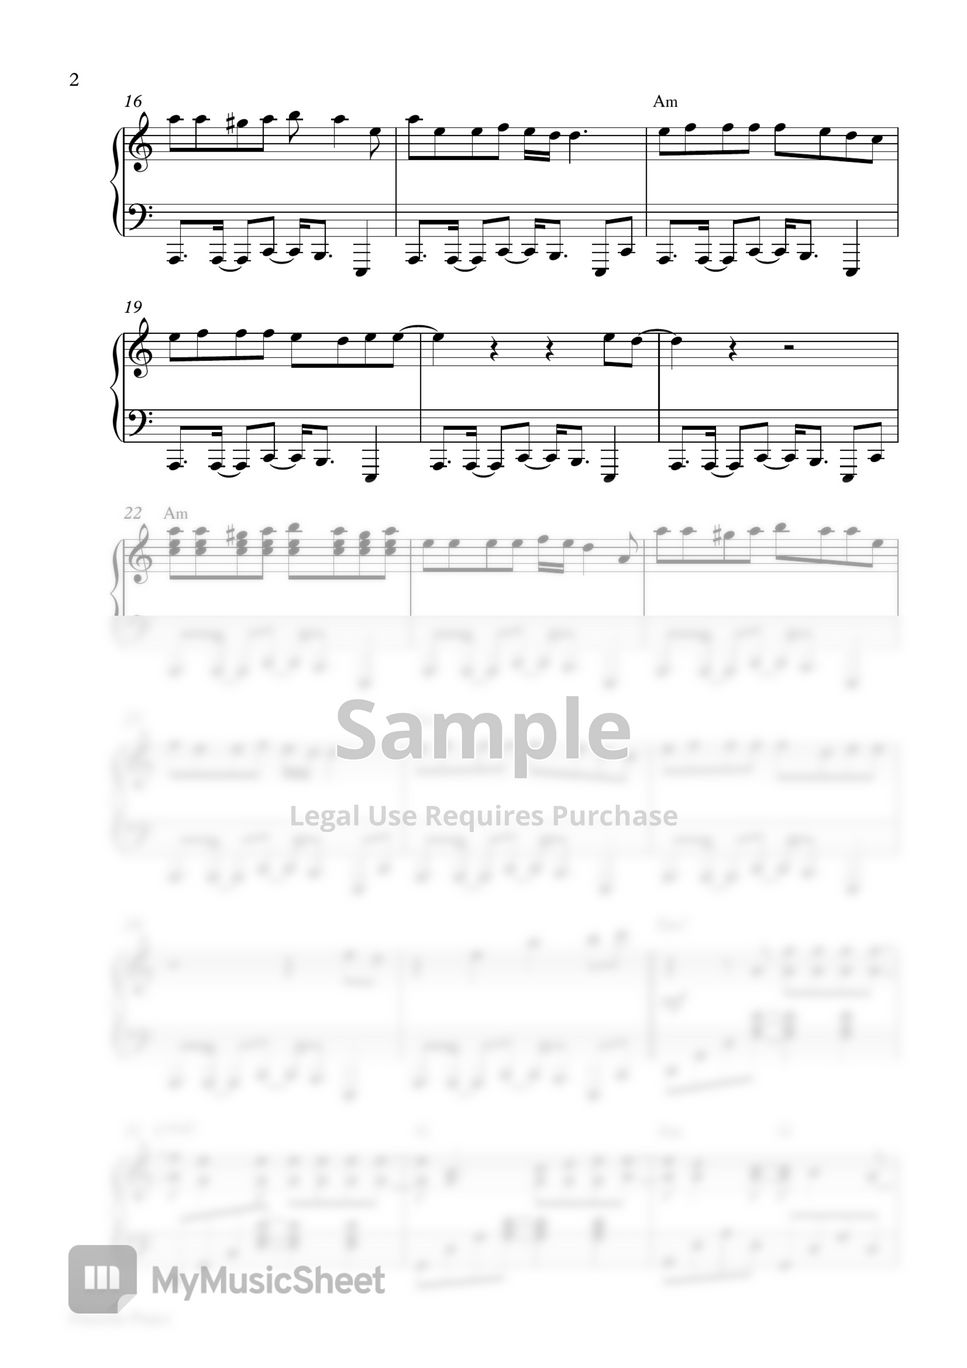 Lady Gaga, BLACKPINK - SOUR CANDY (Piano Sheet) by Pianella Piano